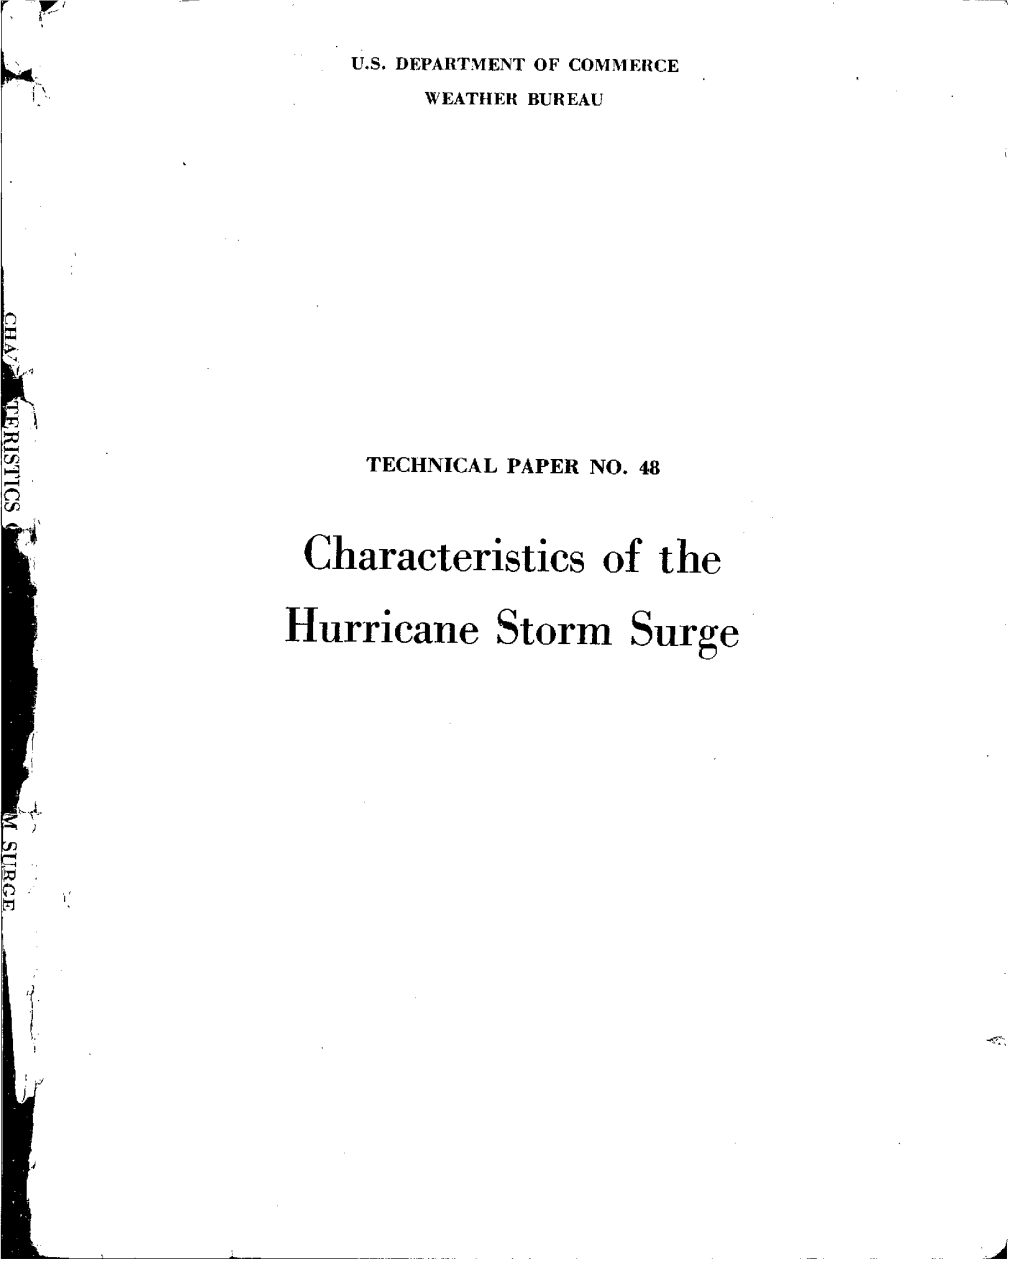 Characteristics of the Hurricane Storm Surge -----I~